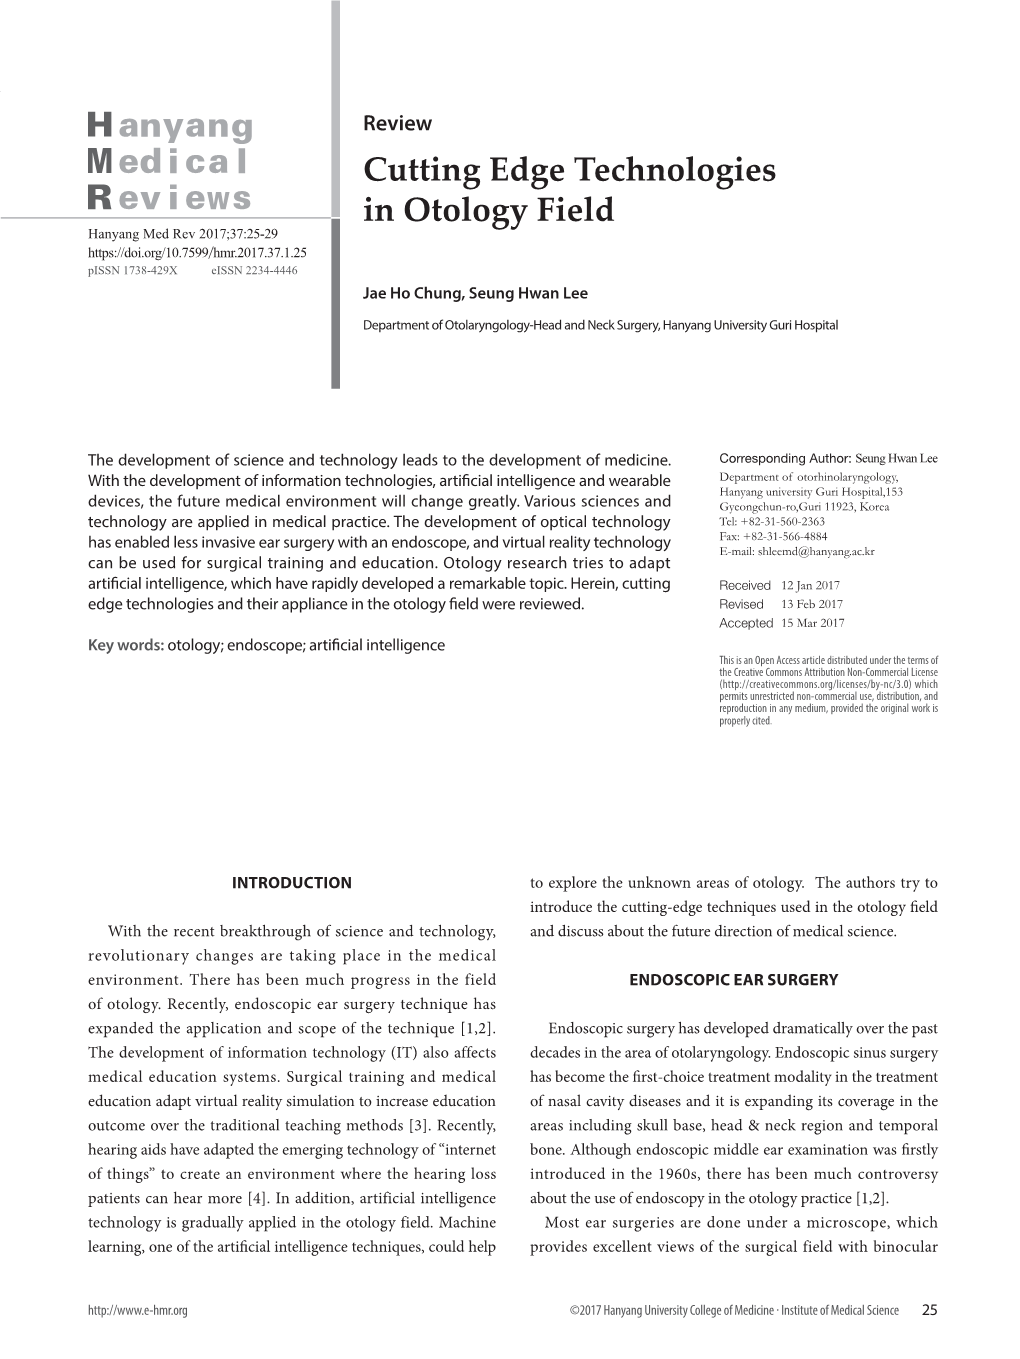 Cutting Edge Technologies in Otology Field